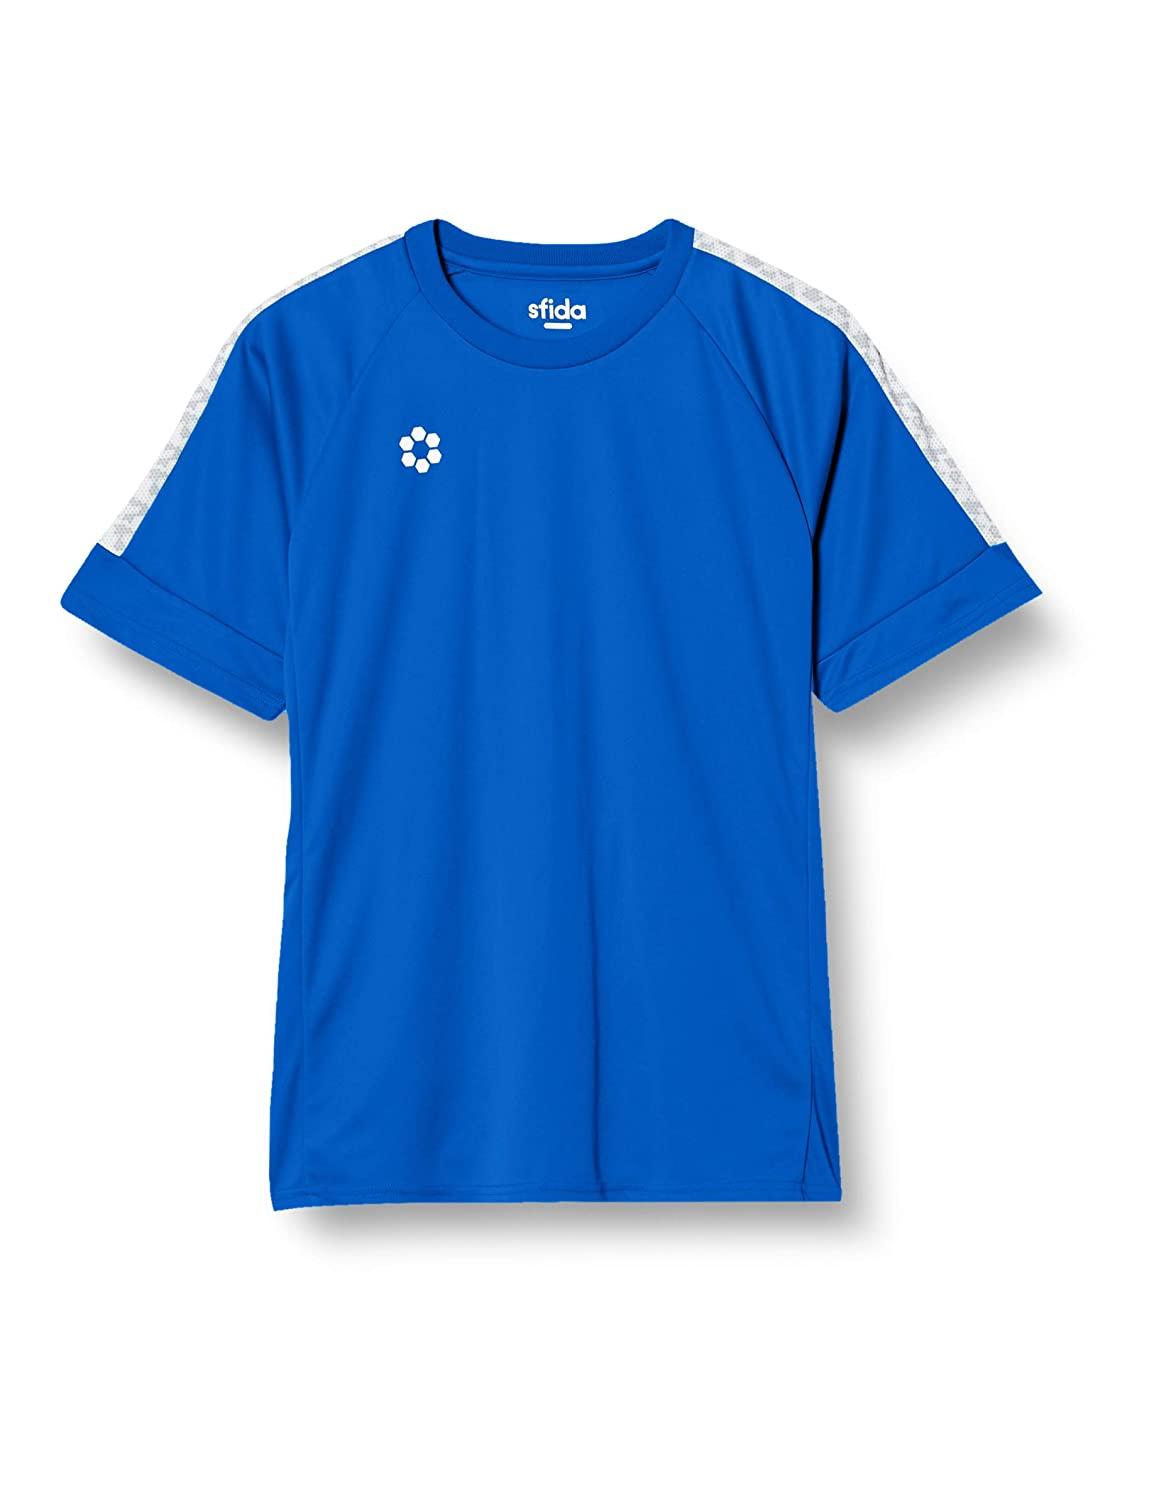 SFIDA(スフィーダ) BPゲームシャツS/S (SA21822) [色 : BLU] [サイズ : XL]